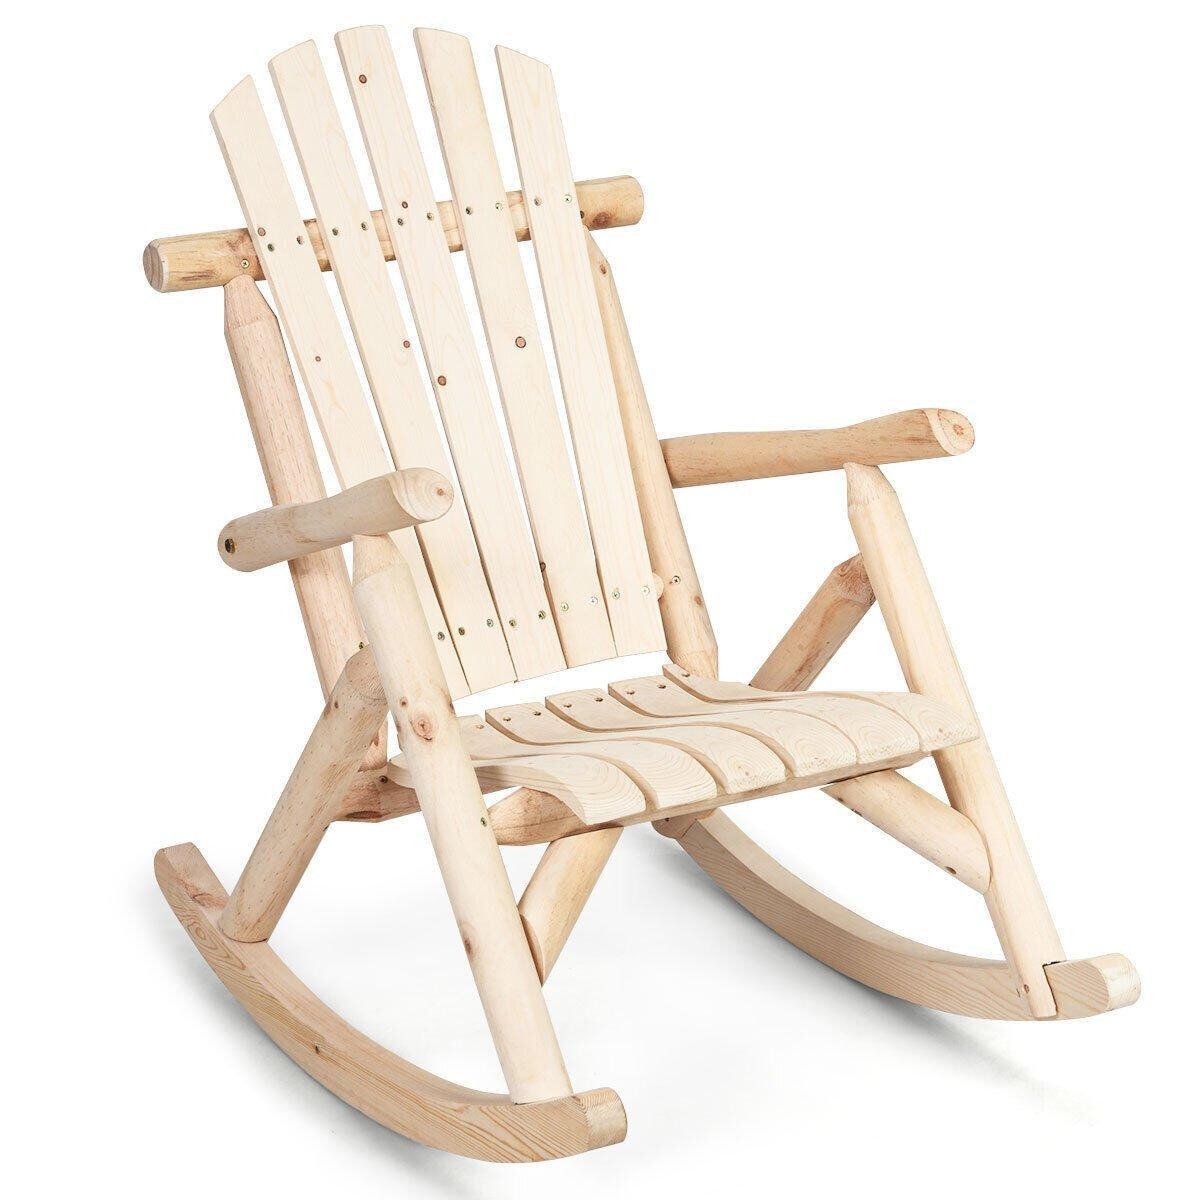 Solid Wood Rocking Chair w/ Comfortable Pine & Fir Porch Rocker - image 1